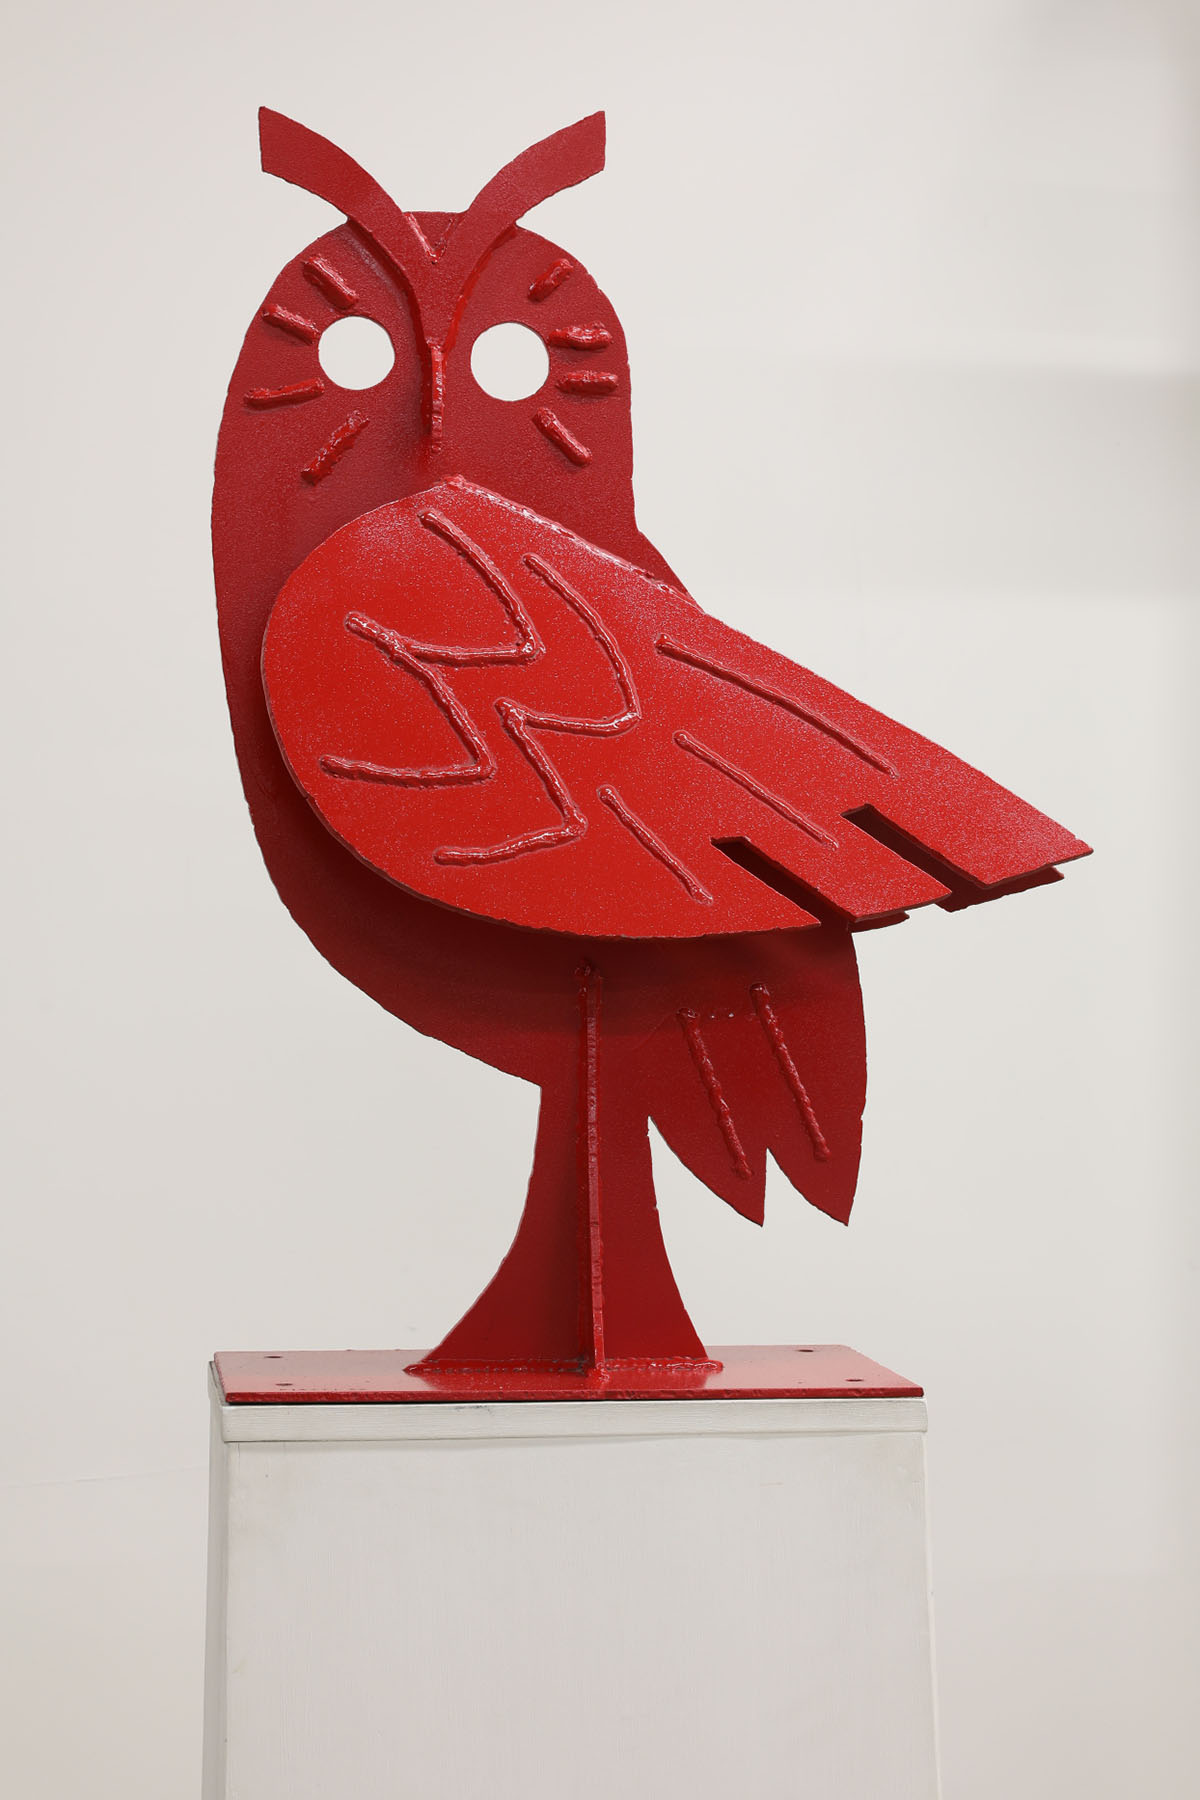 The painted iron sculpture ‘Big Red Owl’ by Celestino Piatti, 1986 (Image: ZB Zürich / Celestino Piatti / ‘Celestino Piatti – The Visual Legacy’ Association)